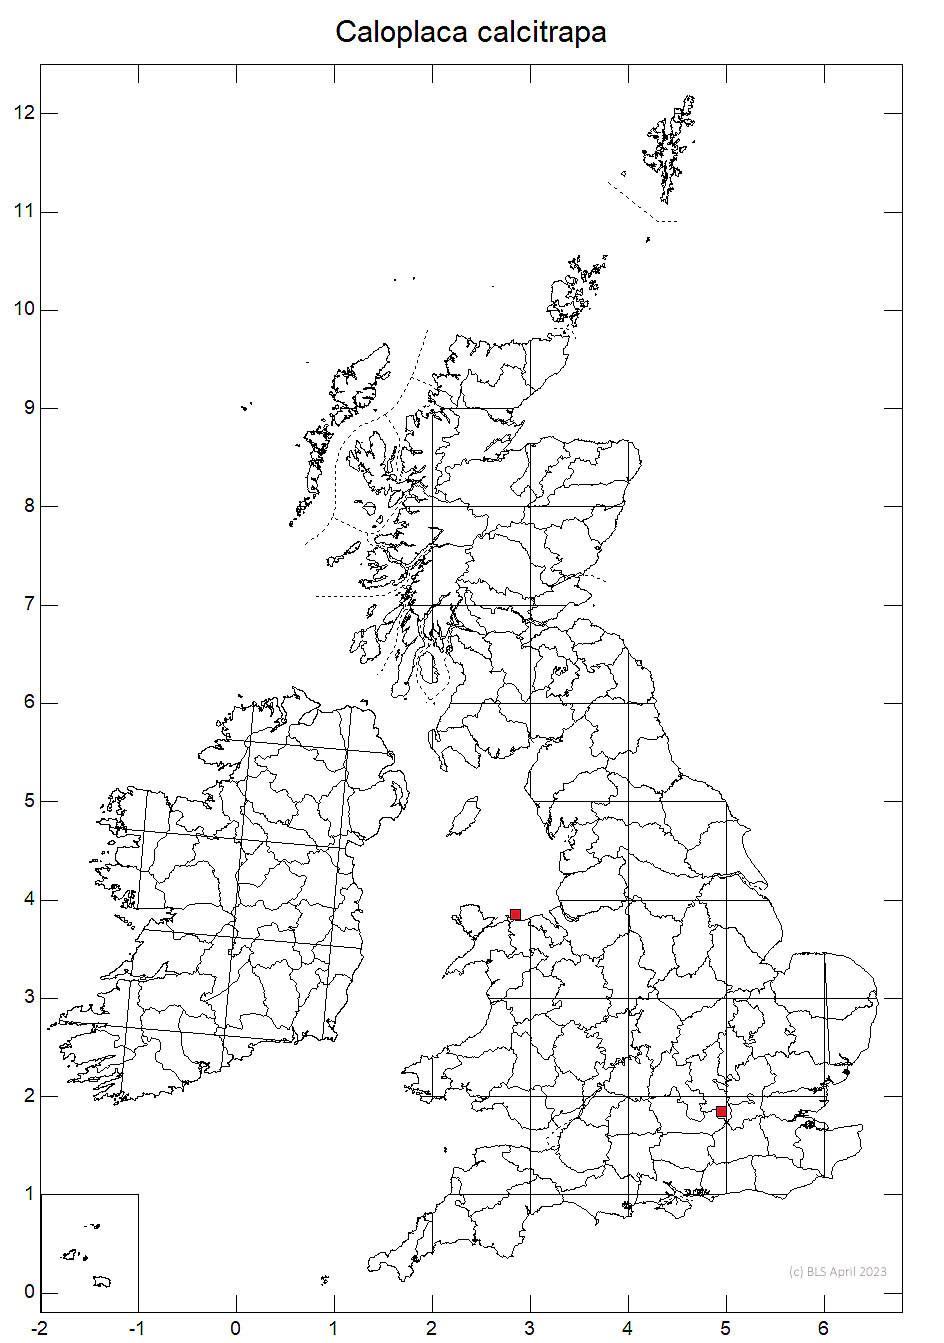 Caloplaca calcitrapa 10km sq distribution map